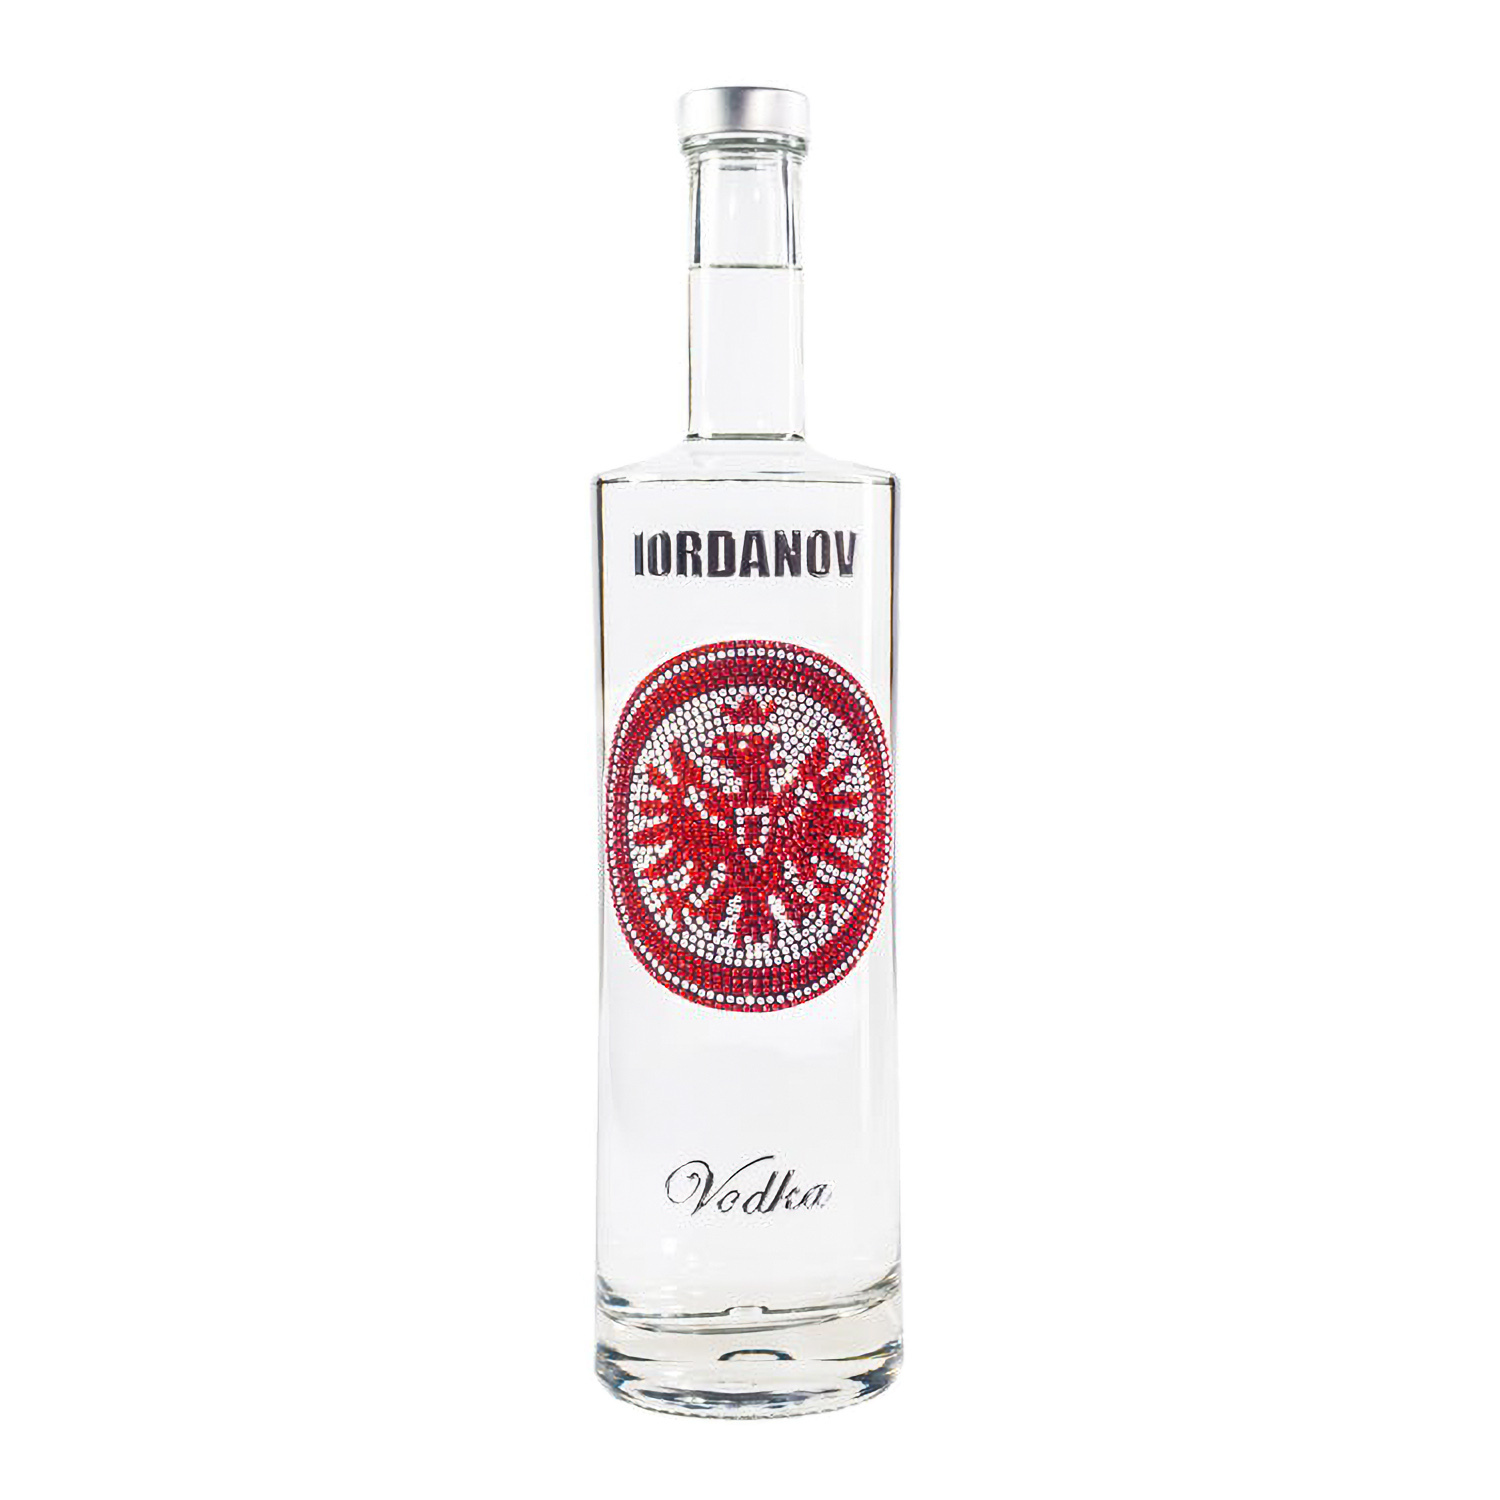 Bild 1: Eintracht Vodka 0,7l IORDANOV (71,43€/L)